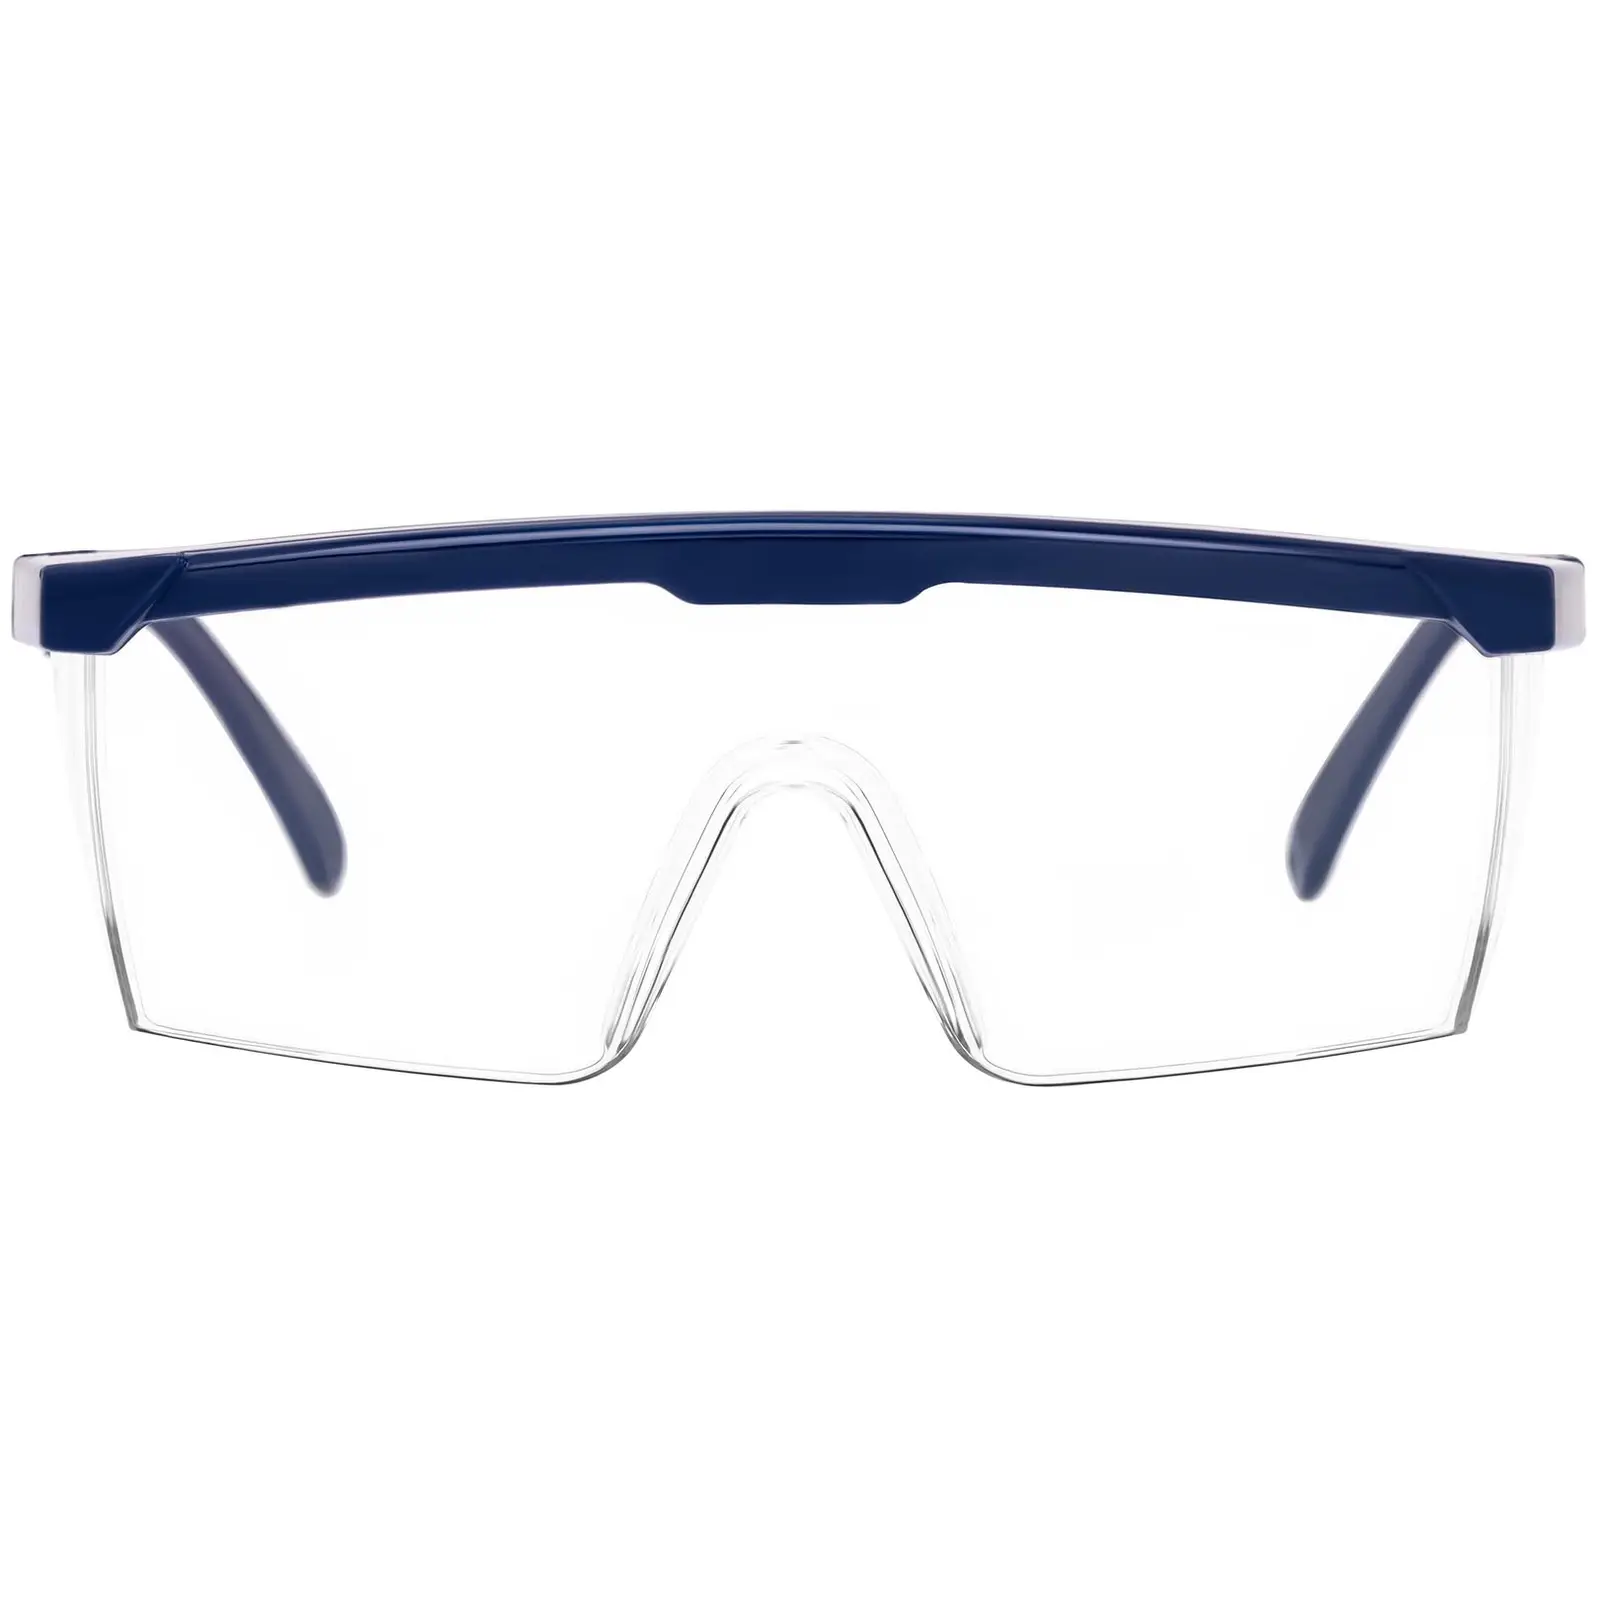 TECTOR beskyttelsesbriller - klart glas - EN166 - justerbare - 10 stk.